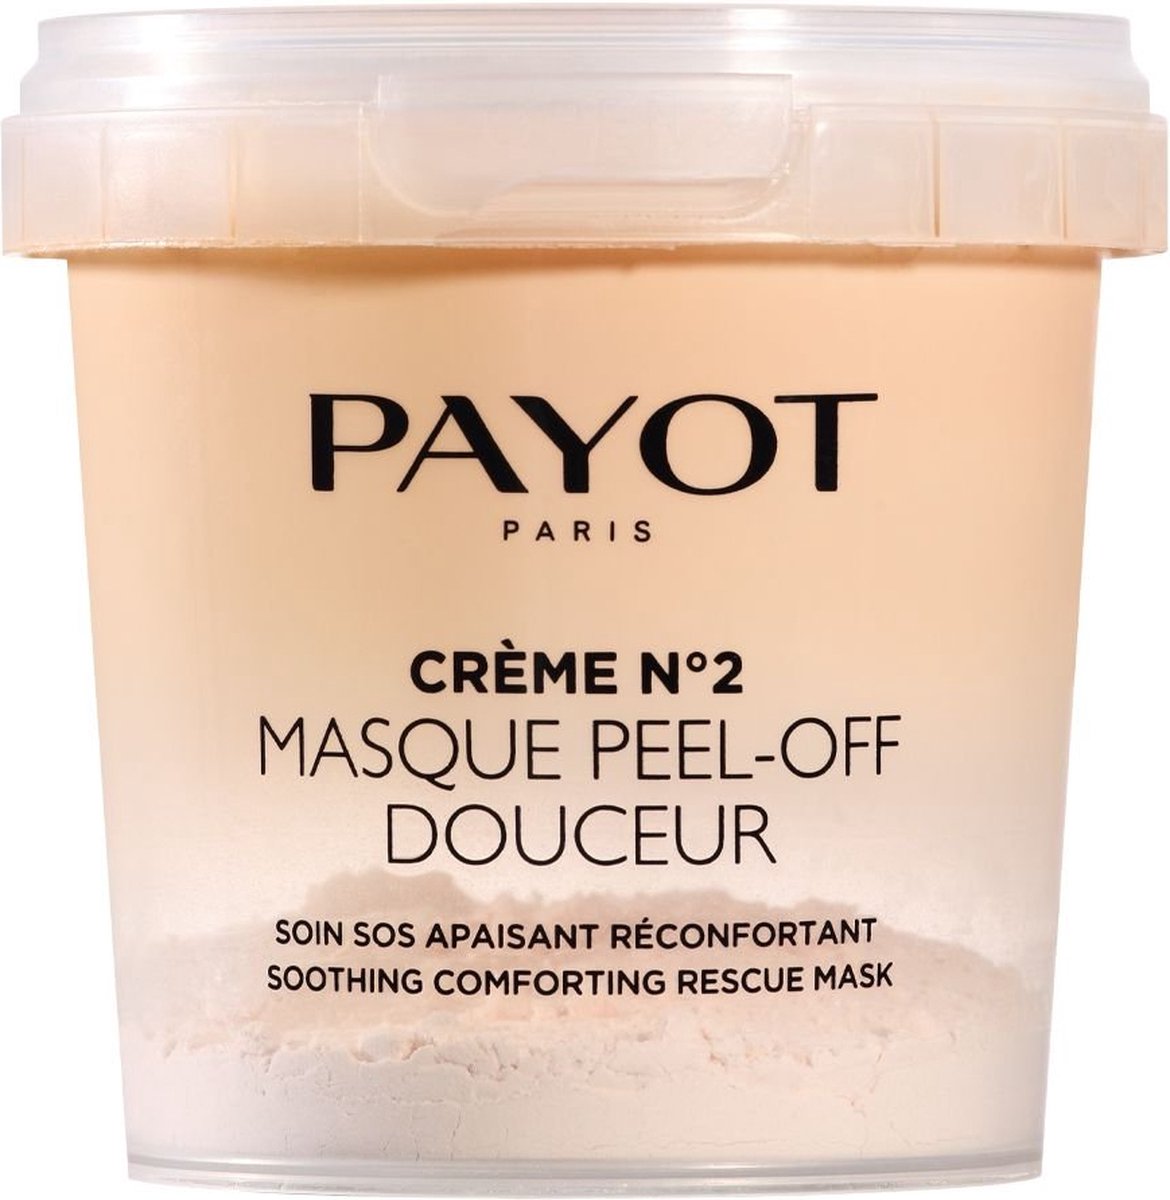 Payot Creme No. 2 Masque Peel-Off Douceur 10 Gr